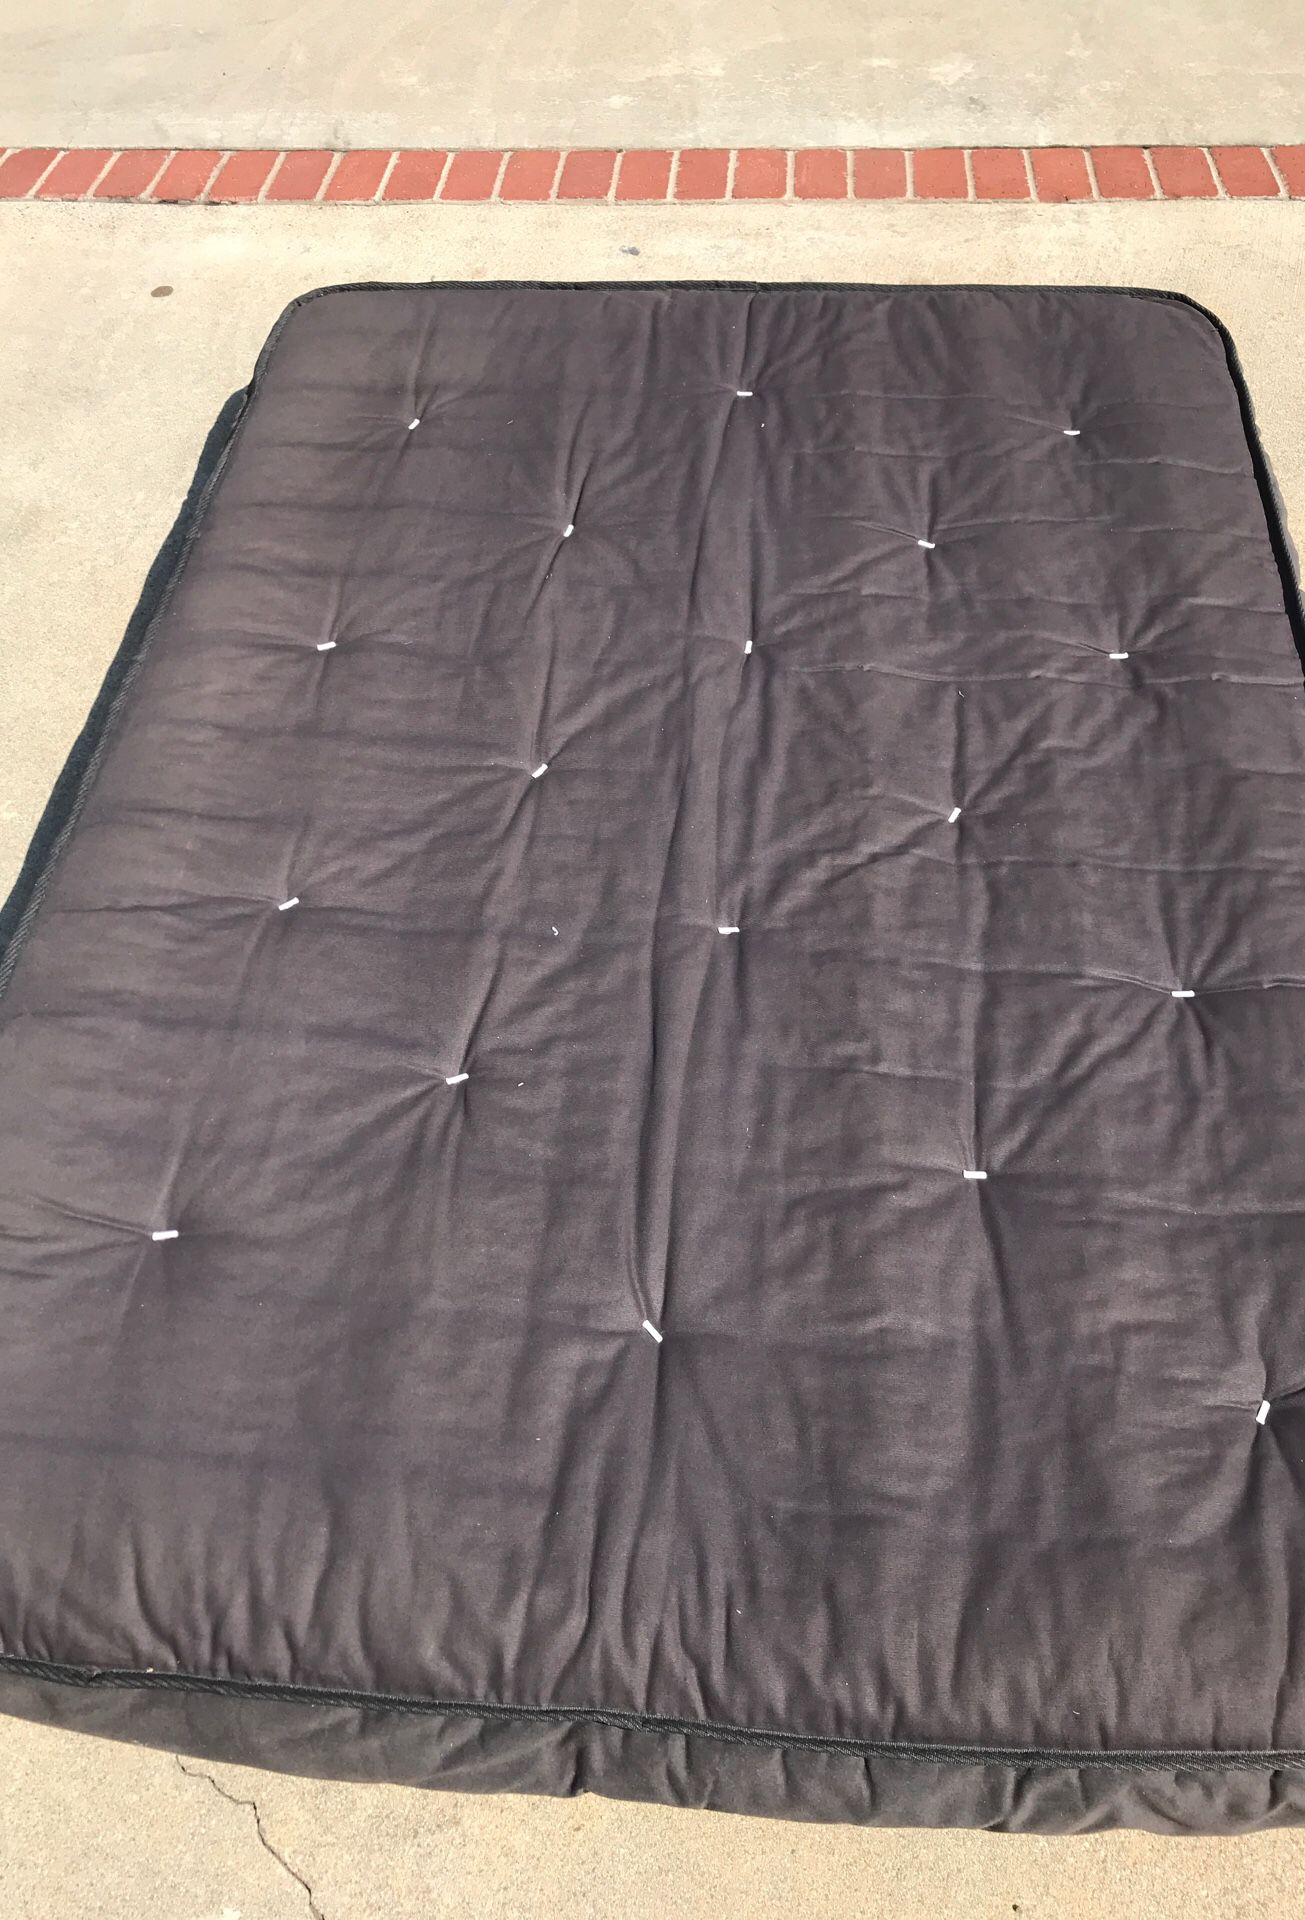 Full size futon mattress